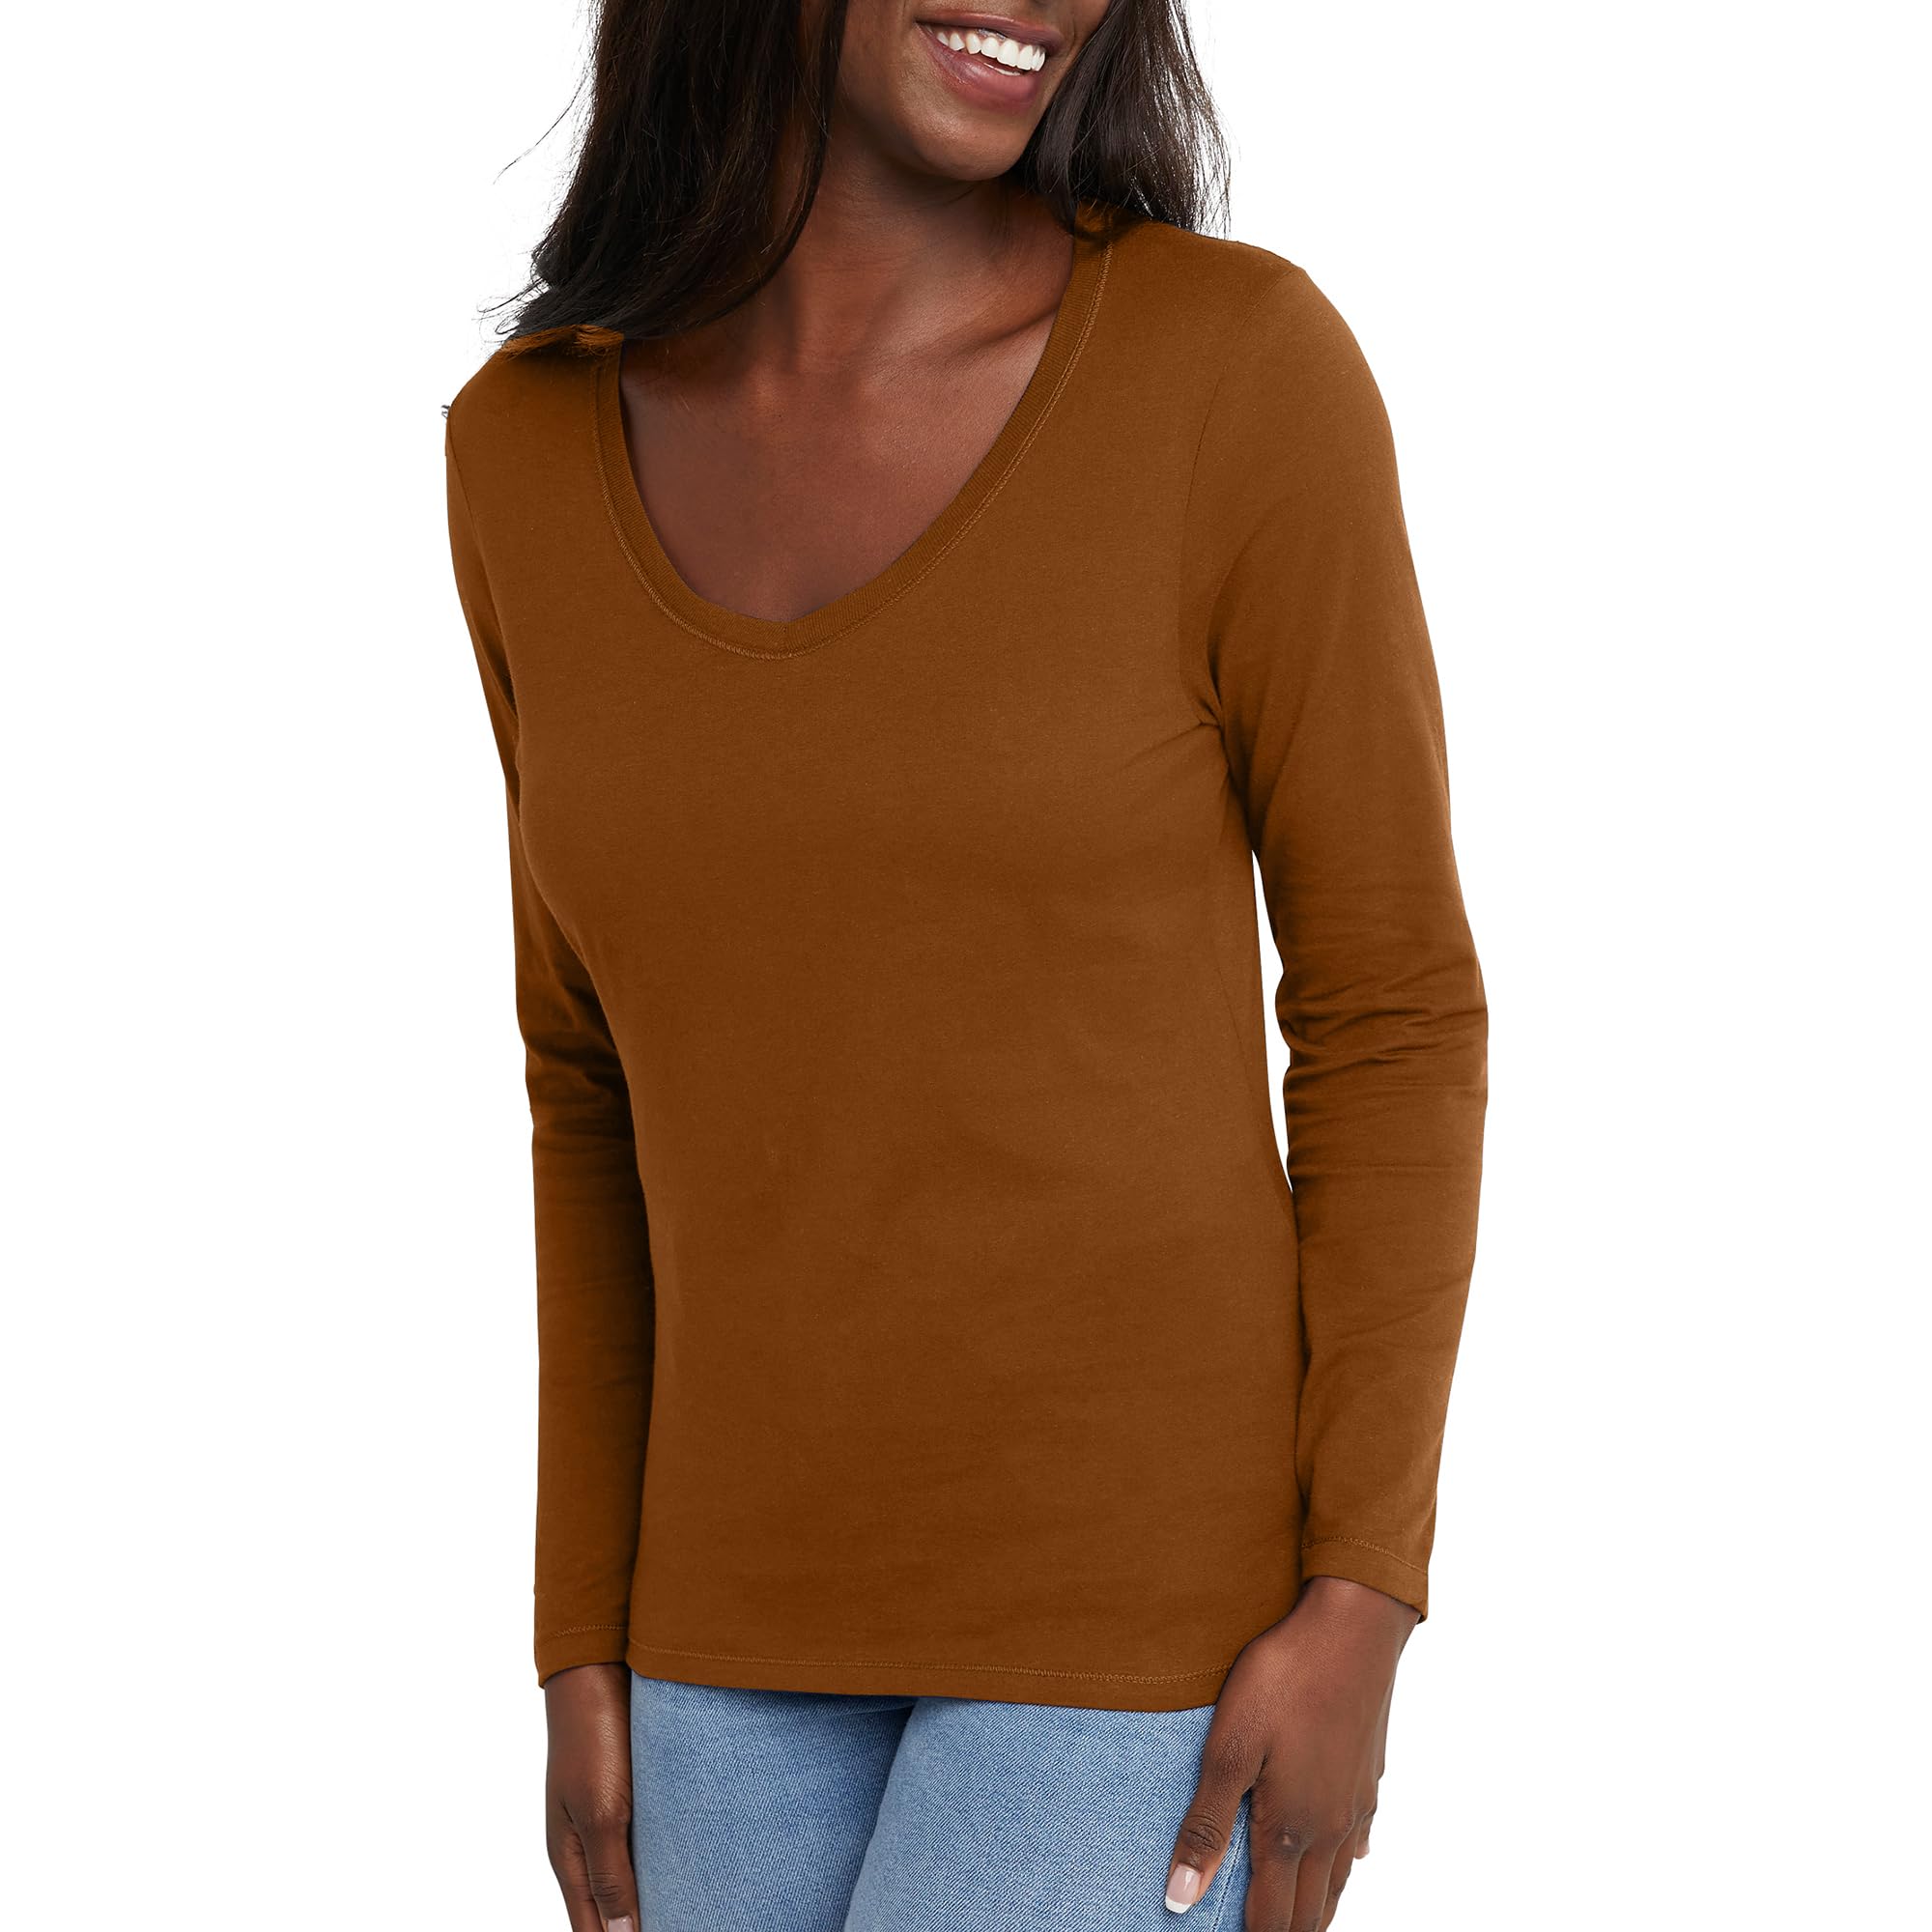 Hanes Womens Originals Long Sleeve Cotton V-Neck T-Shirt, Lightweight V-Neck Tee, Modern Fit